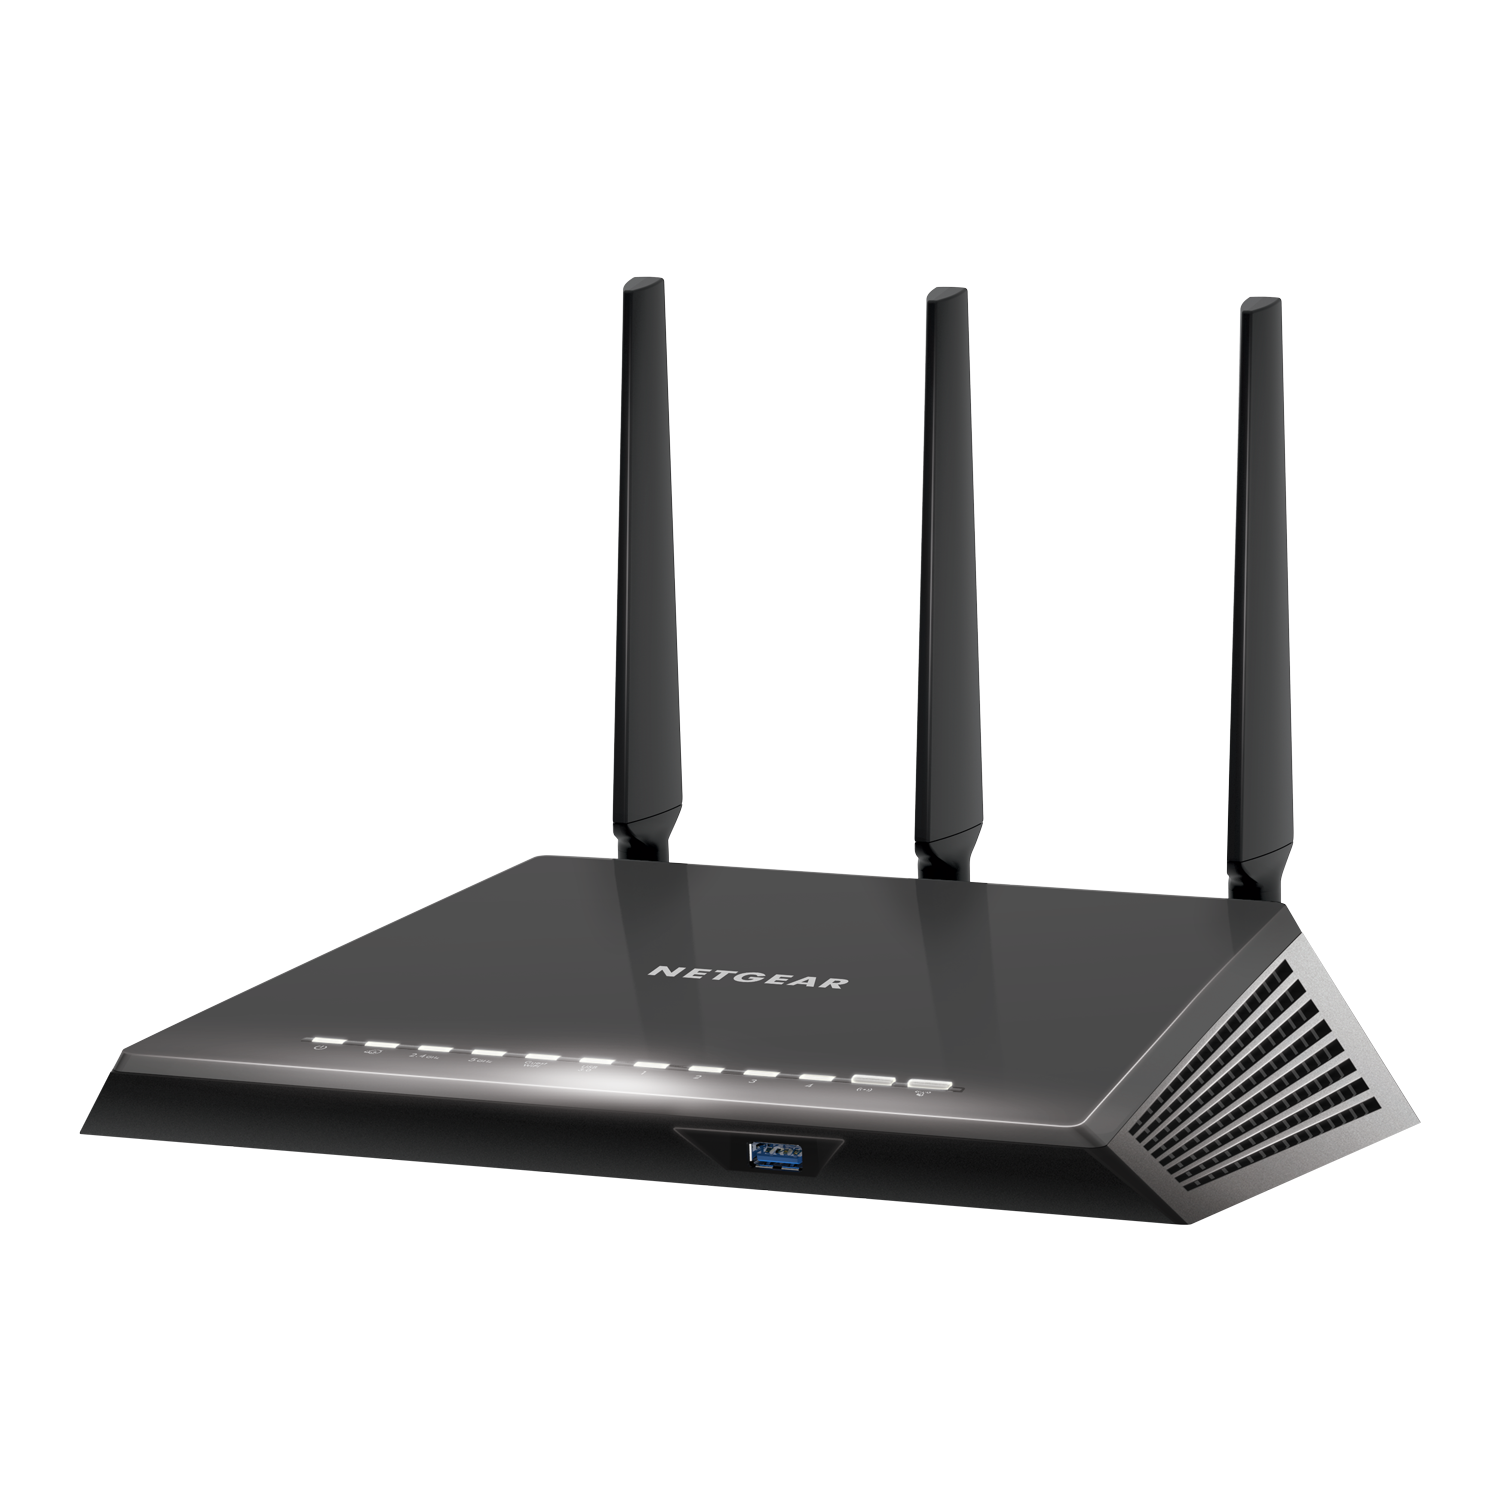 NETGEAR - Nighthawk AC2600 WiFi Router, 2.6Gbps (R7450) - image 1 of 6